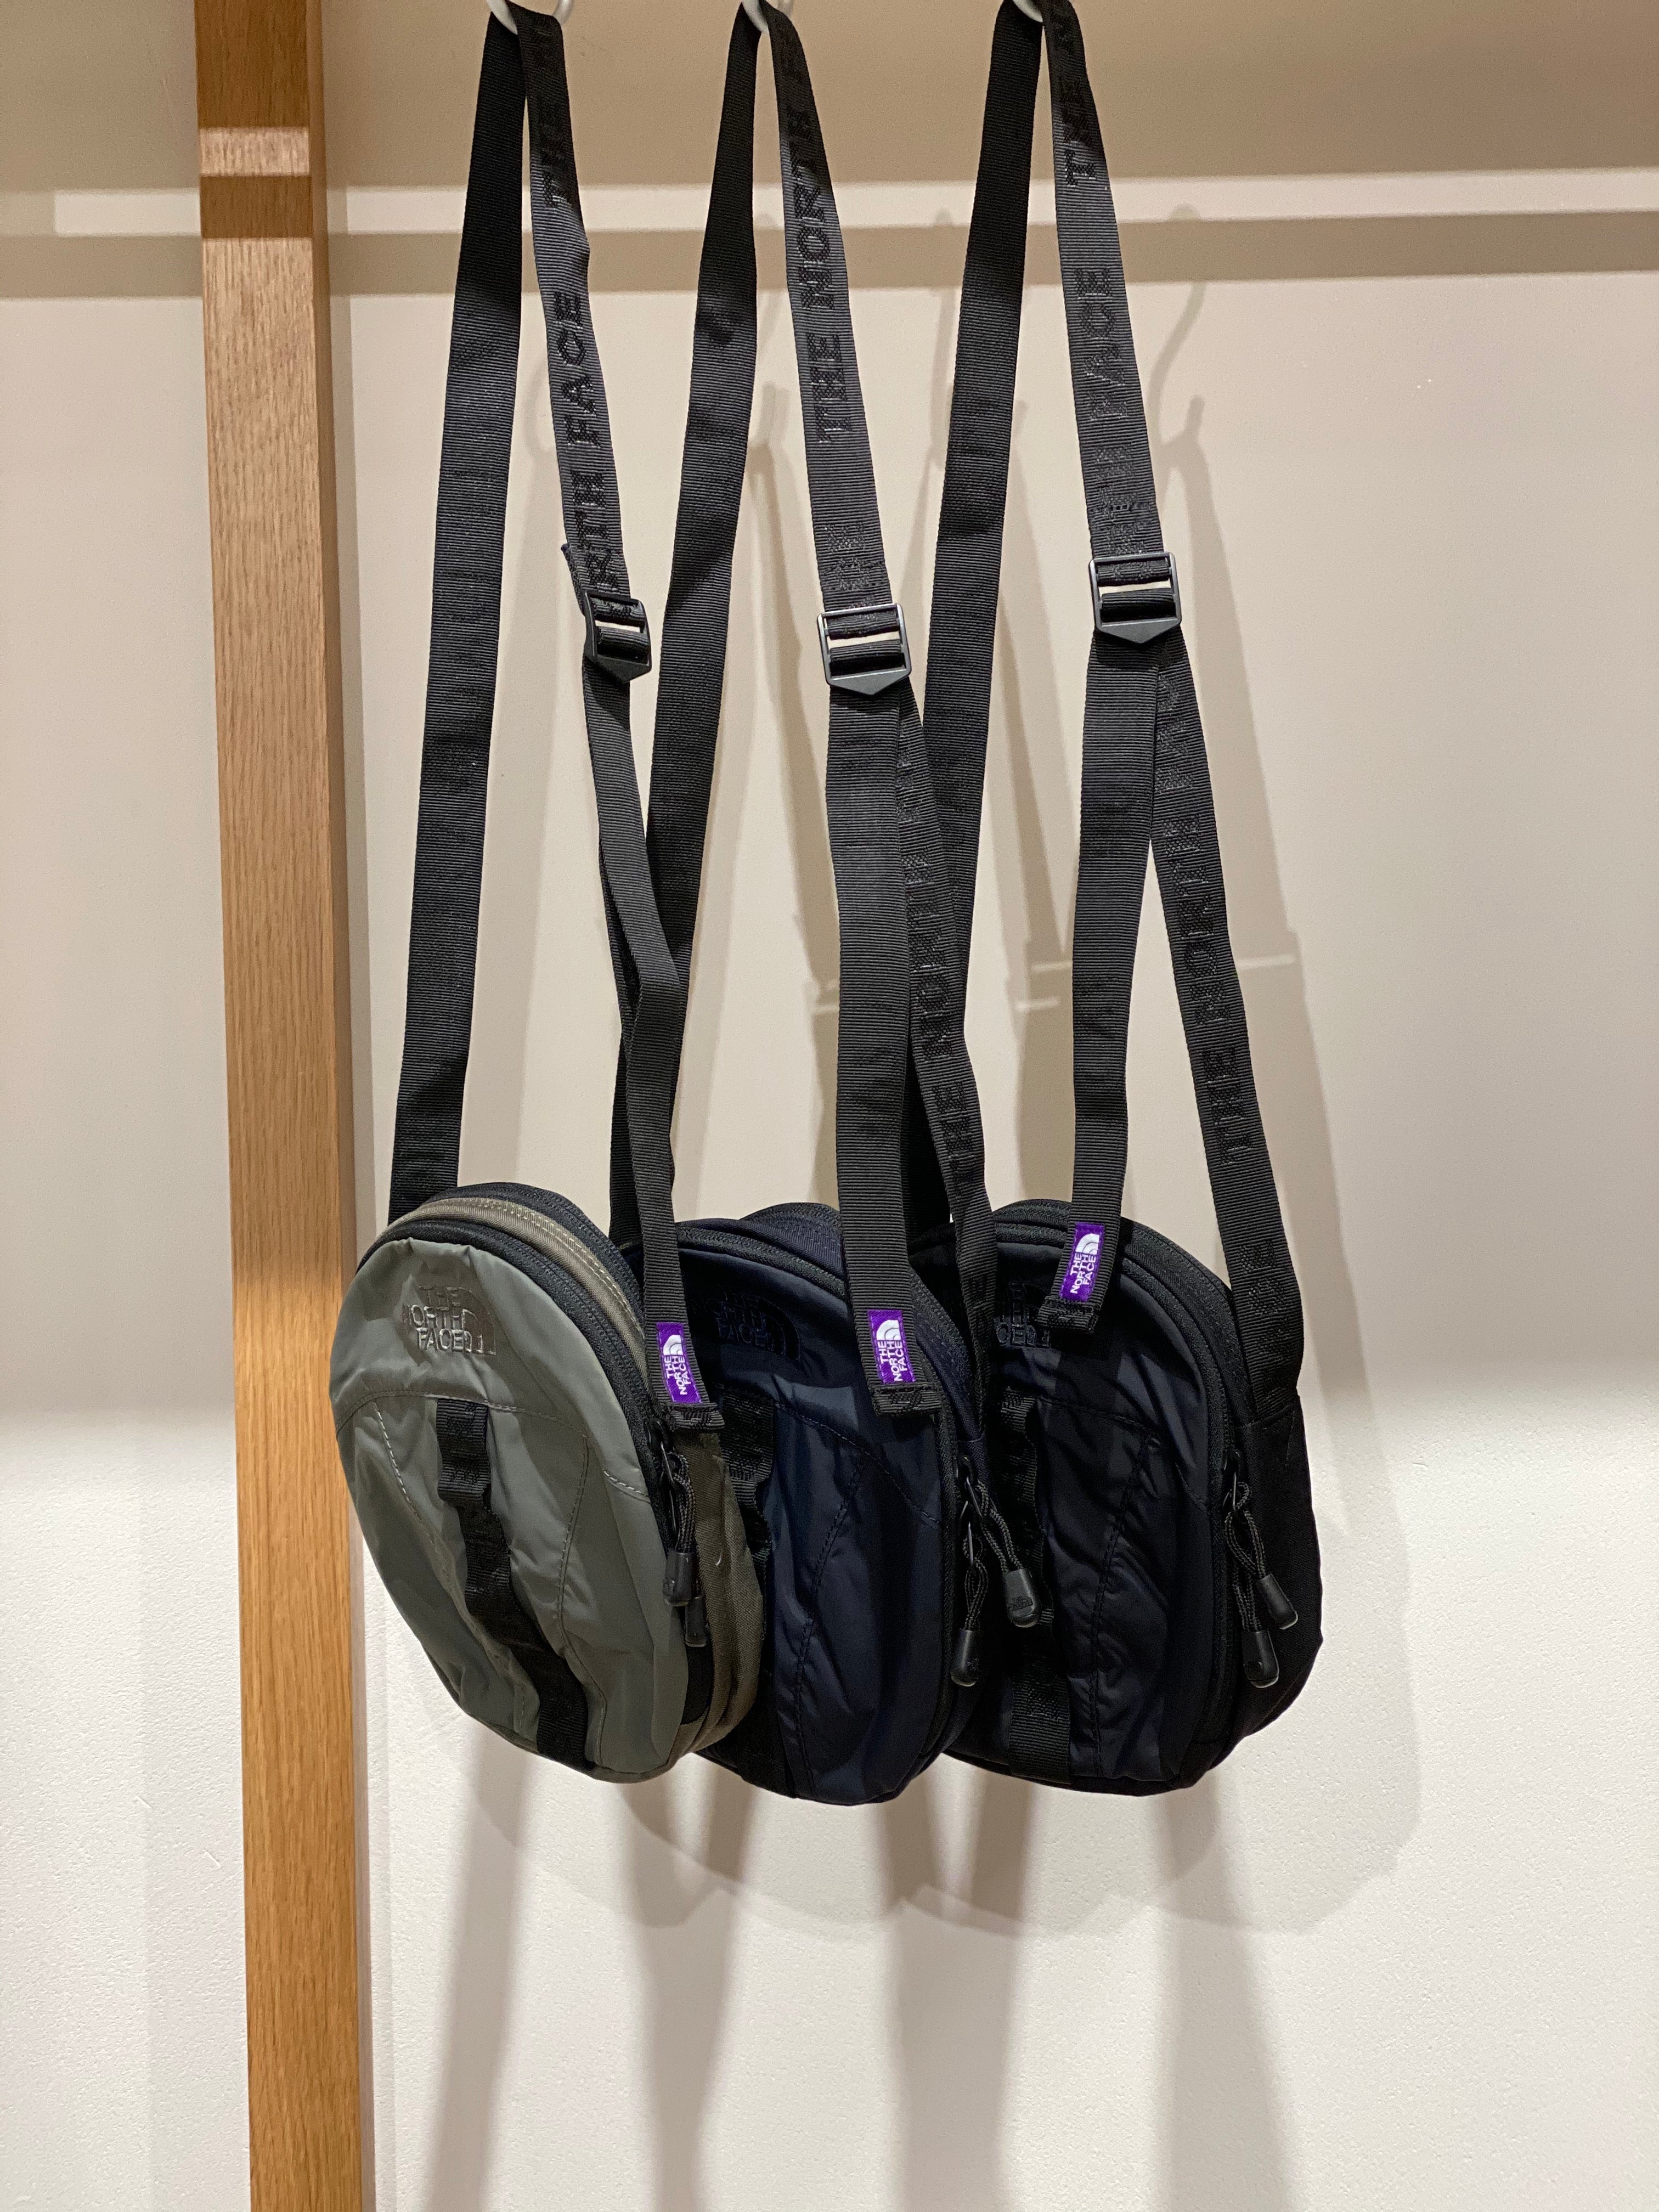 THE NORTH FACE PURPLE LABEL CORDURA Nylon Shoulder Bag – unexpected store